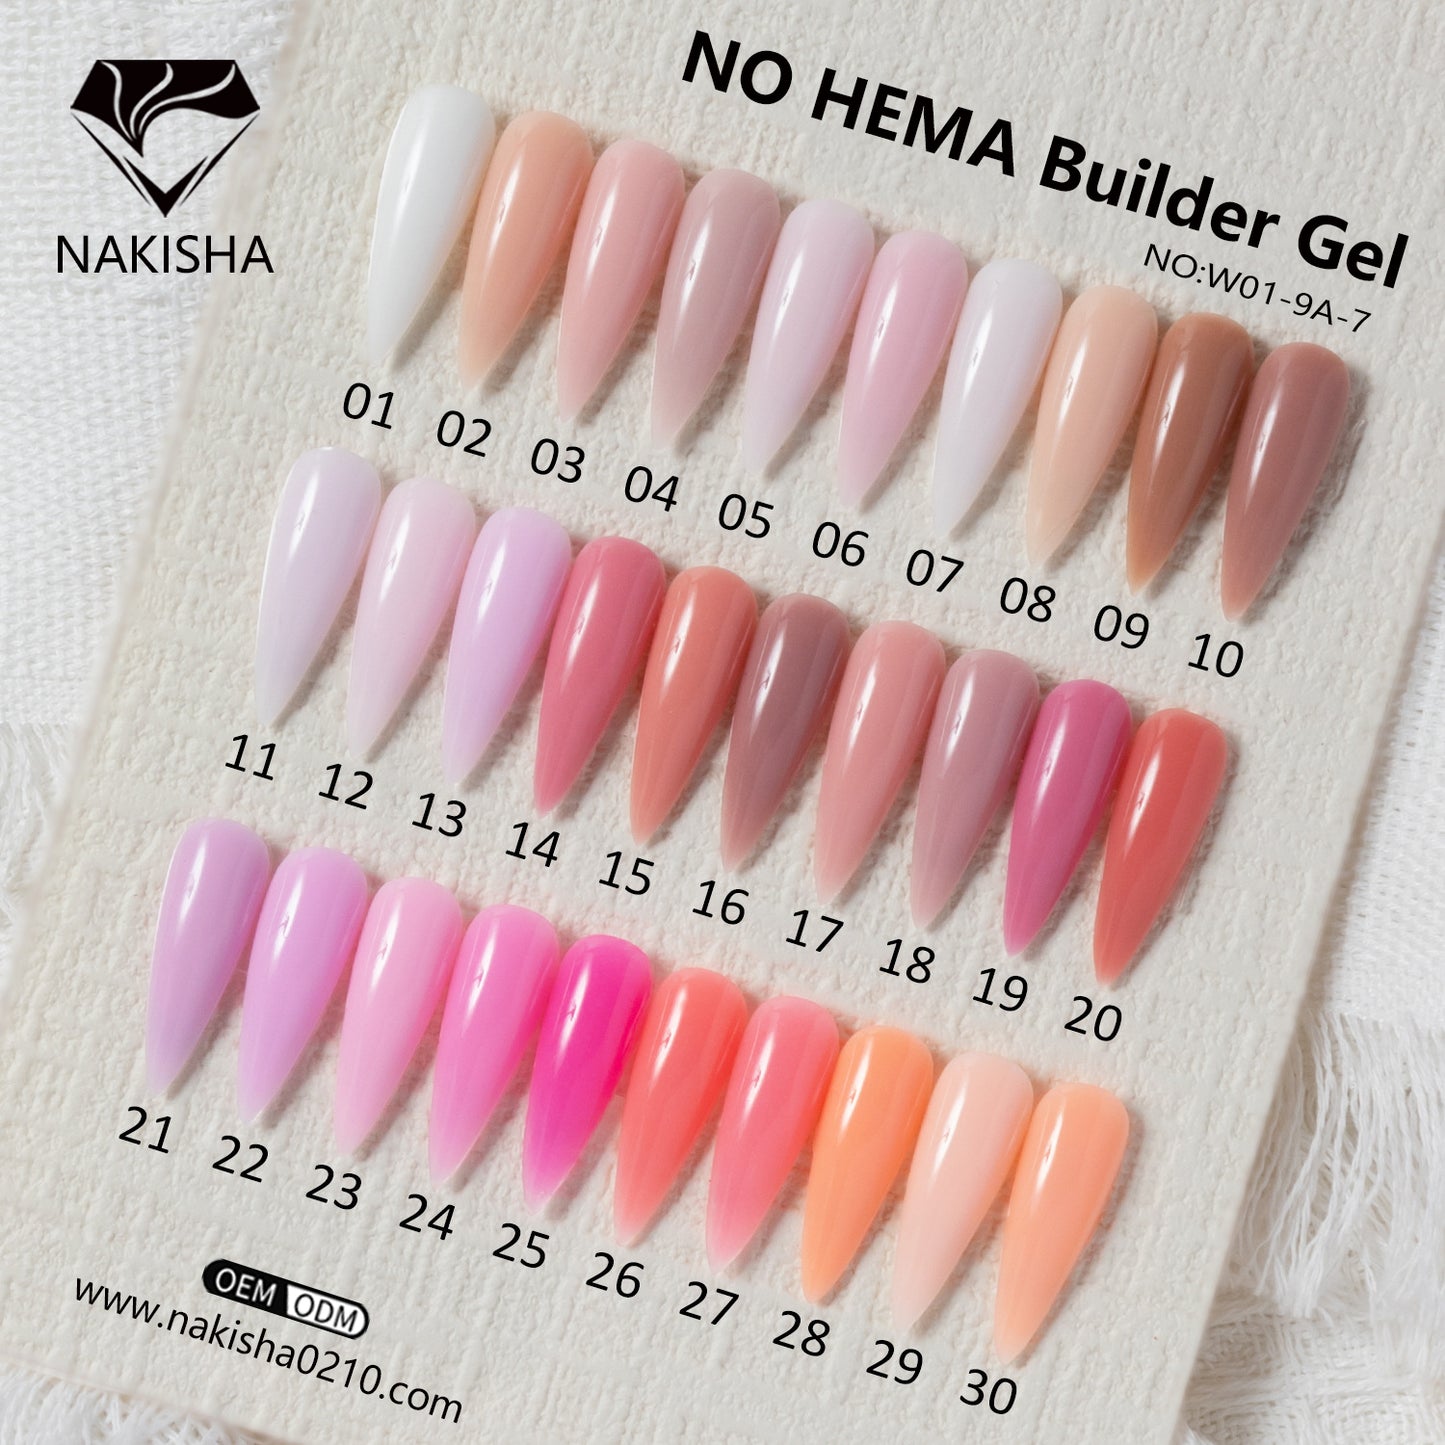 NAKISHA Hema Free Builder Gel Nail Extension